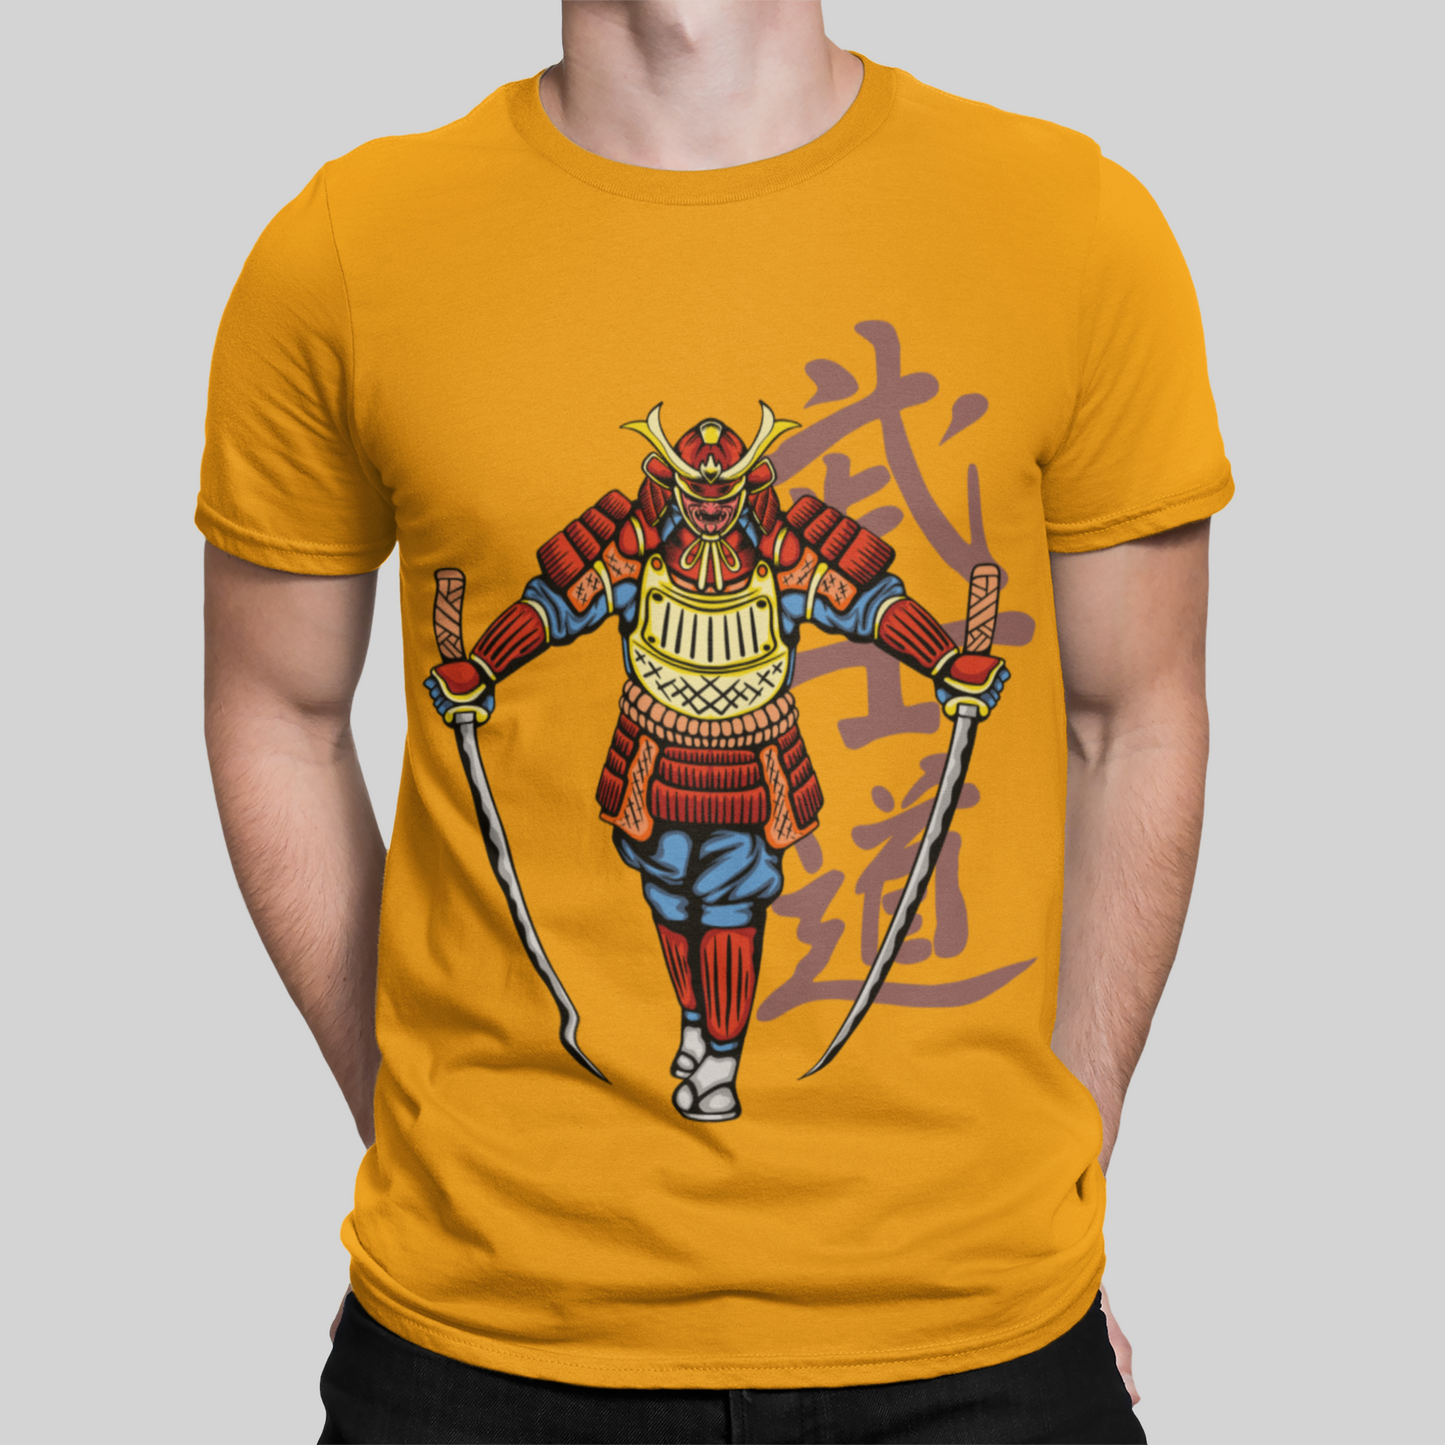 Samurai Mustard Yellow T-Shirt For Men